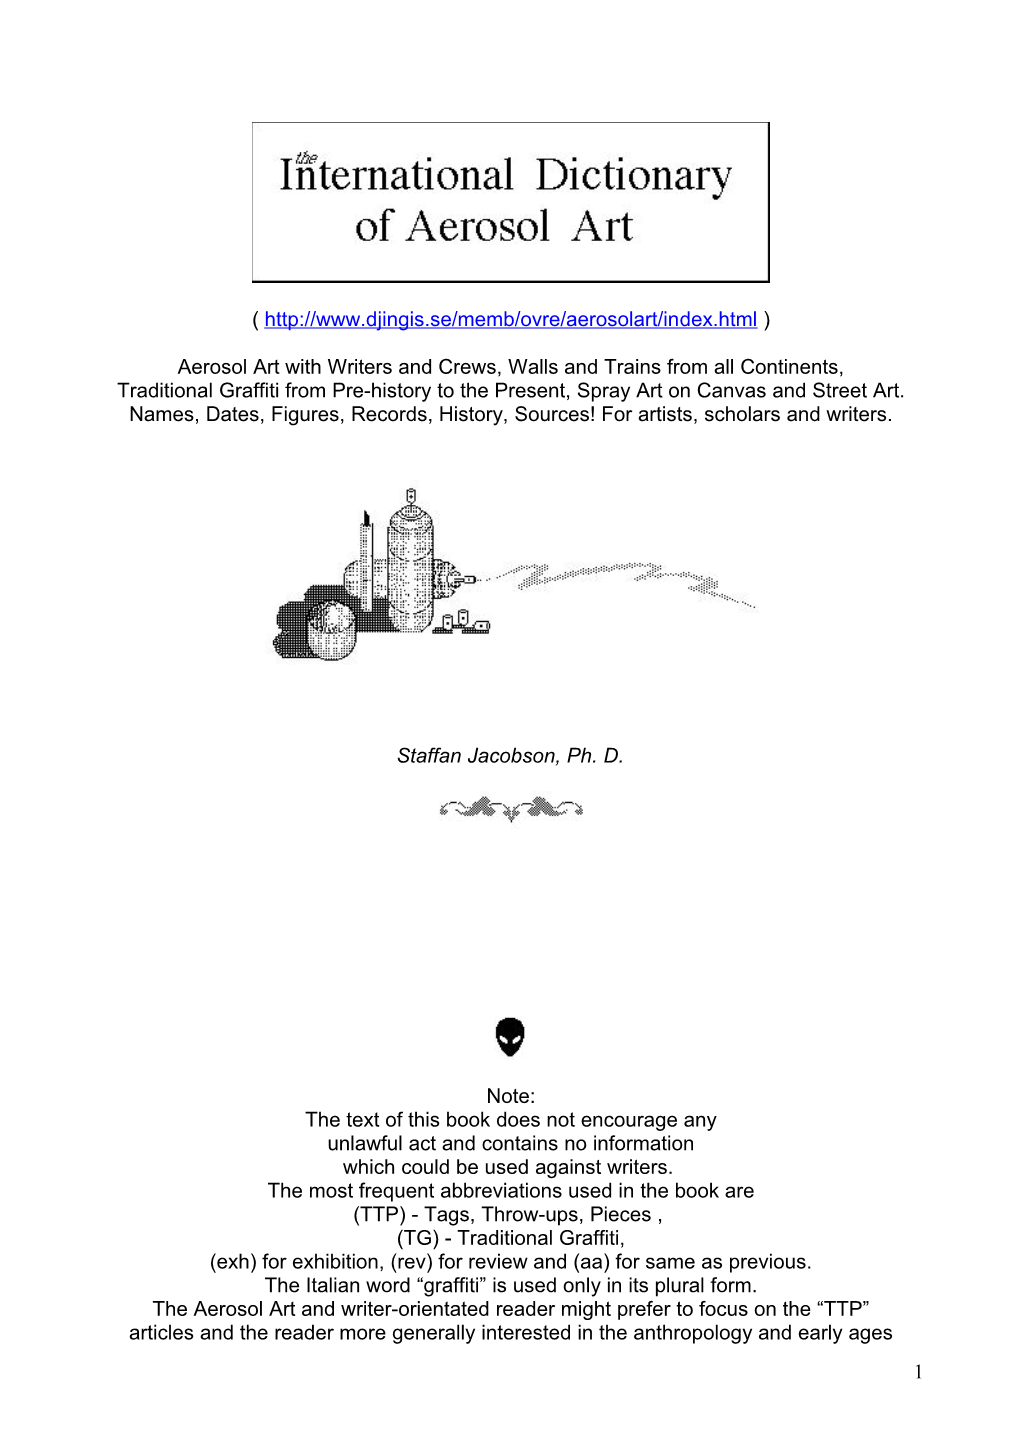 The International Dictionary of Aerosol Art.Pdf